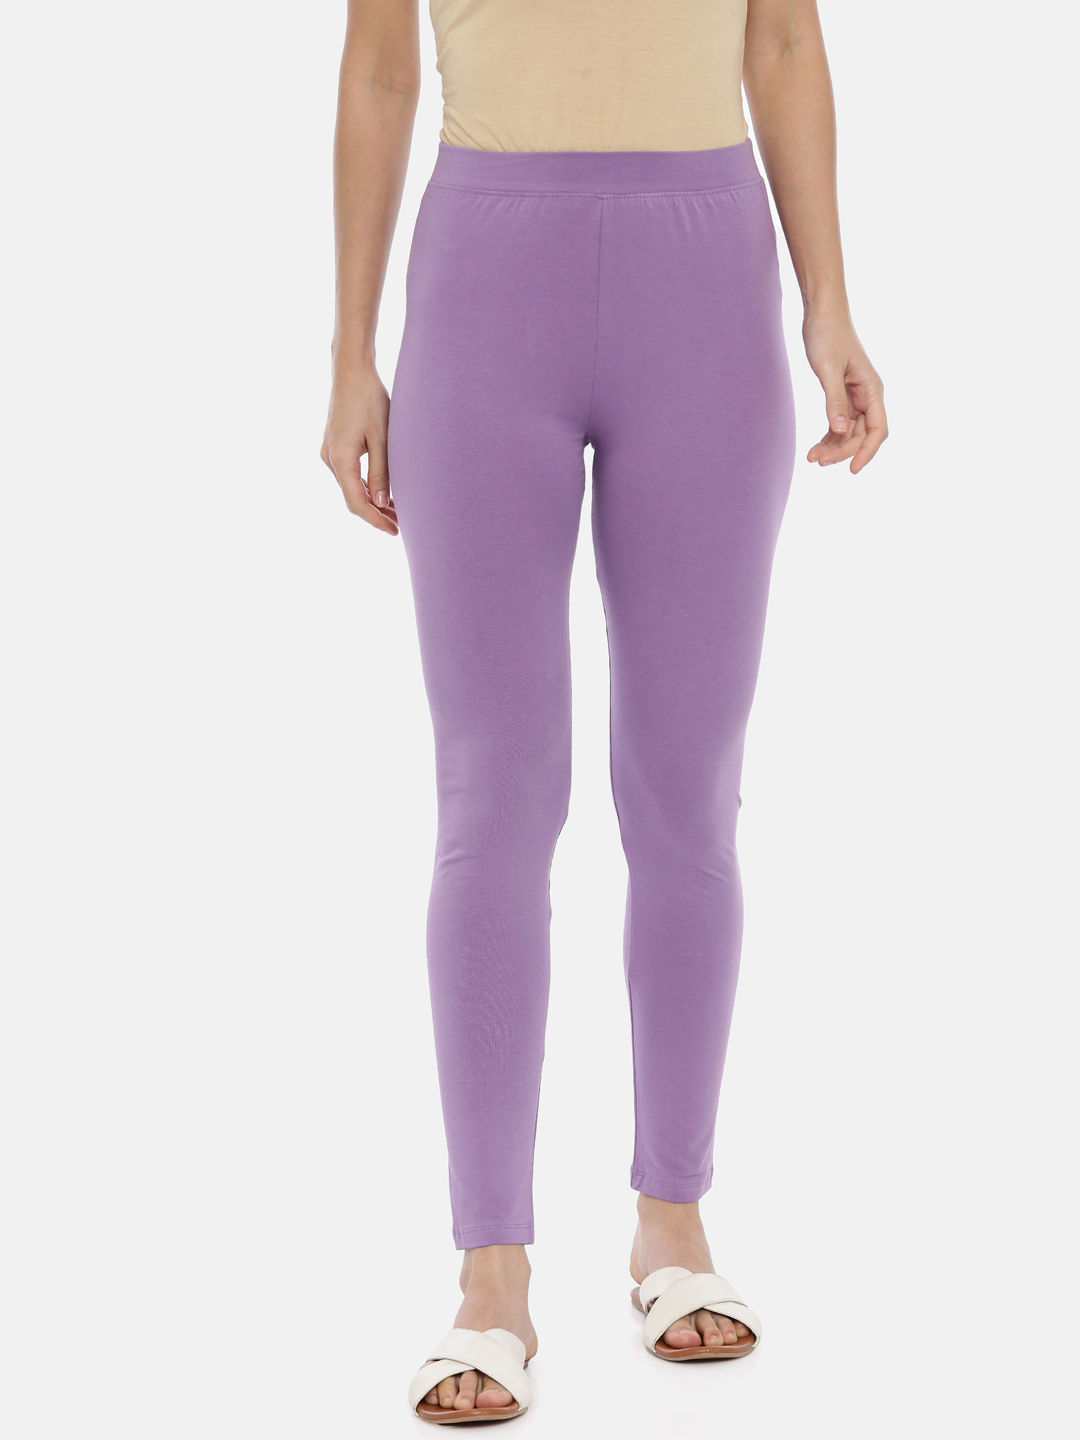 Buy Lavender Leggings for Women by GO COLORS Online | Ajio.com